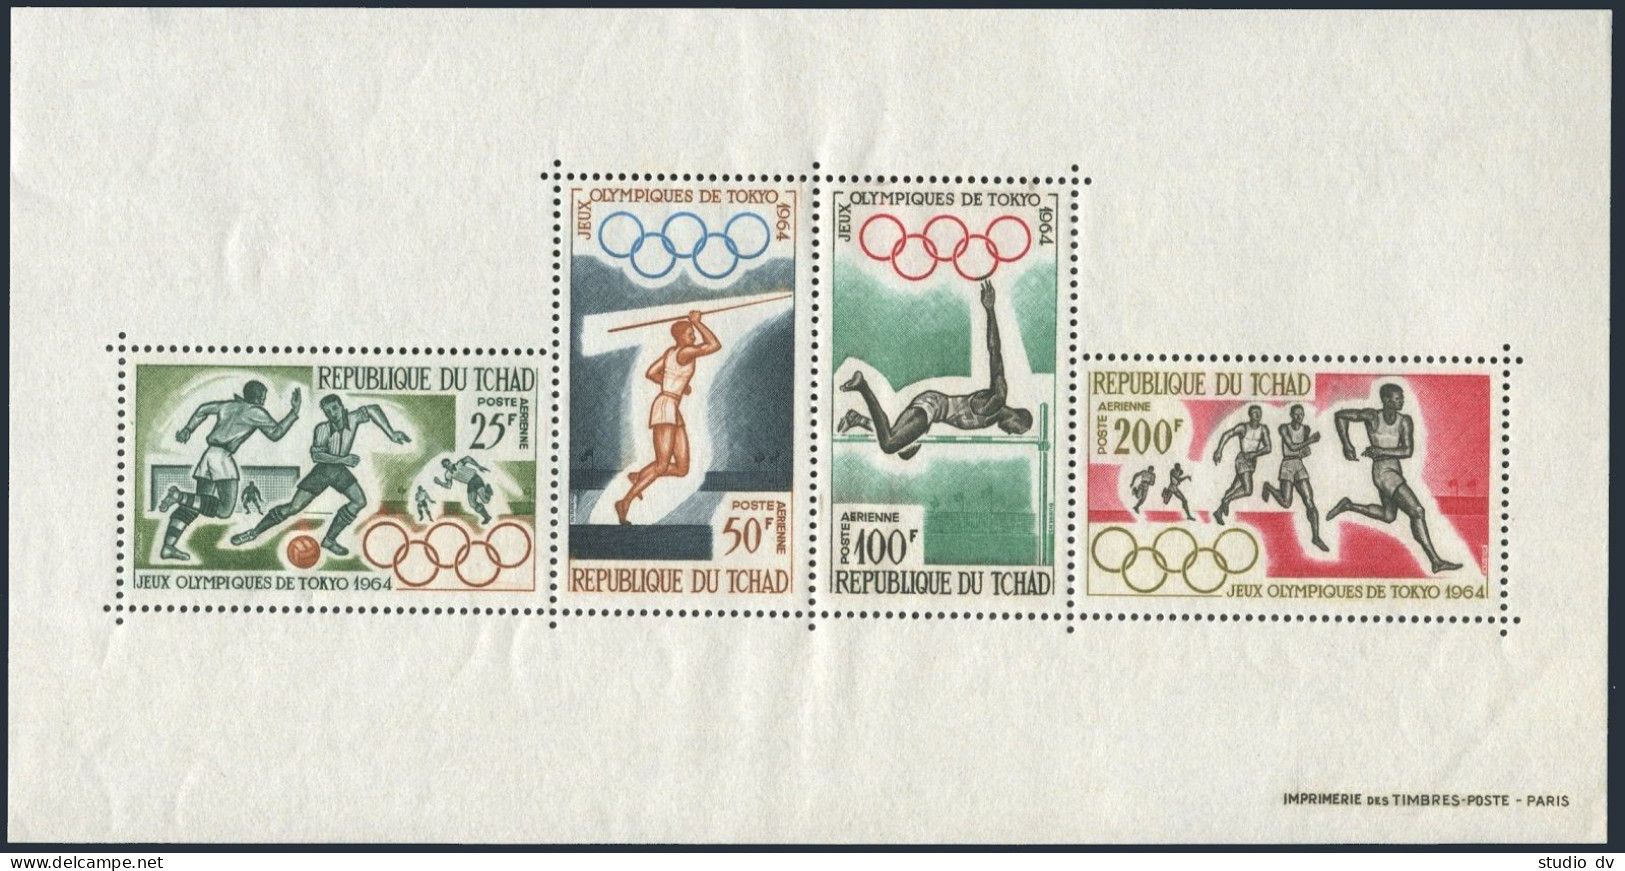 Chad C18a, MNH. Mi Bl.1. Olympics Tokyo-1964. Soccer, Javelin Throw, High Jump, - Tchad (1960-...)